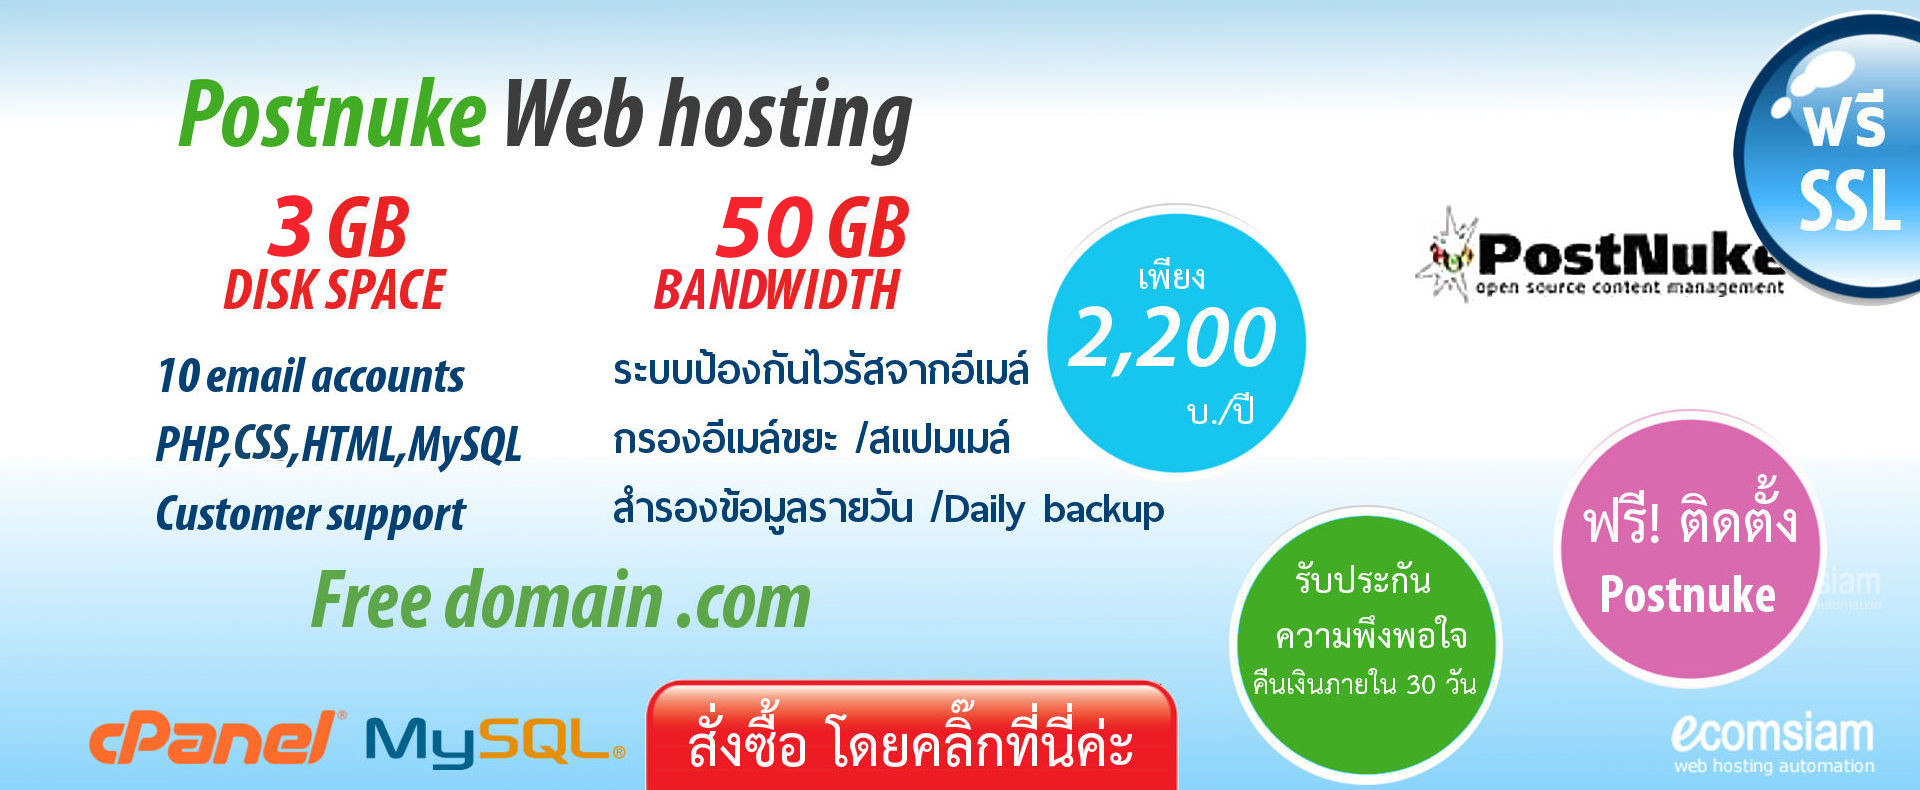 postnuke web hosting thailand -เว็บโฮสติ้ง ฟรีโดเมน ฟรี SSL - แนะนำ thailandwebhost.com web hosting thailand - Support ลูกค้า บริการดี ดูแลดี